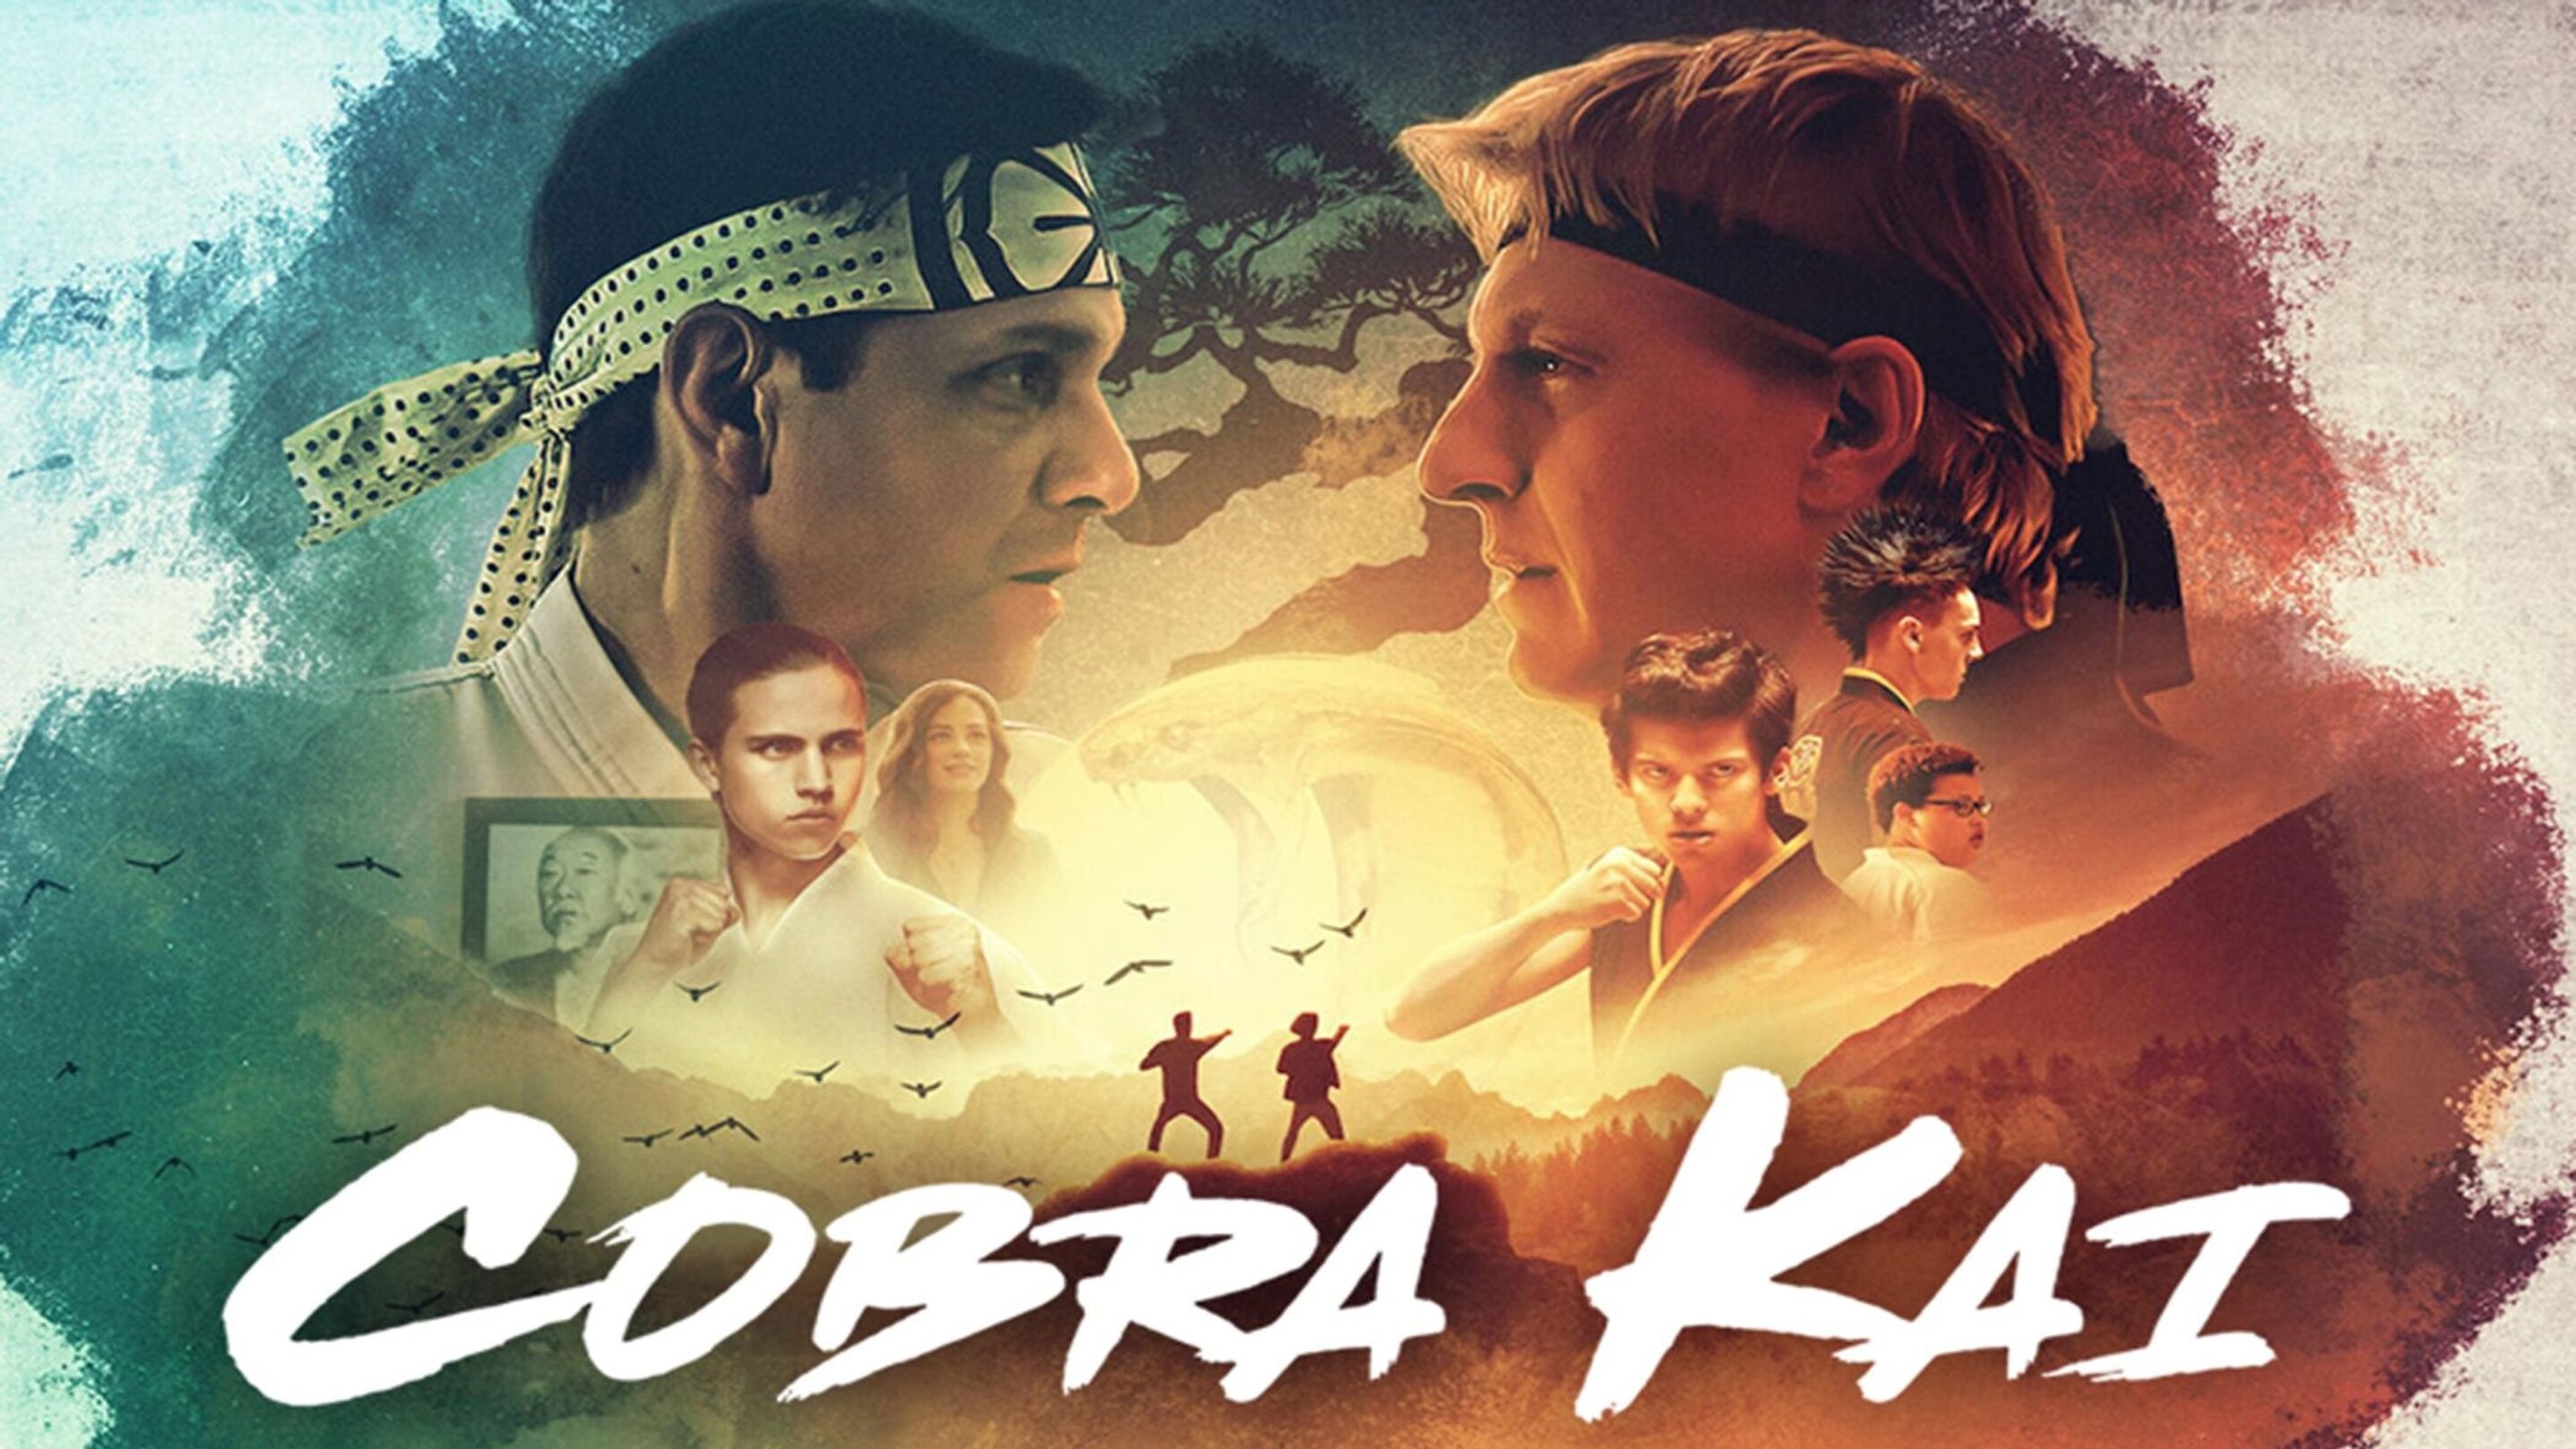 Desvelada la fecha de estreno de la batalla final de Cobra Kai con un nuevo póster de la famosa serie de Netflix 